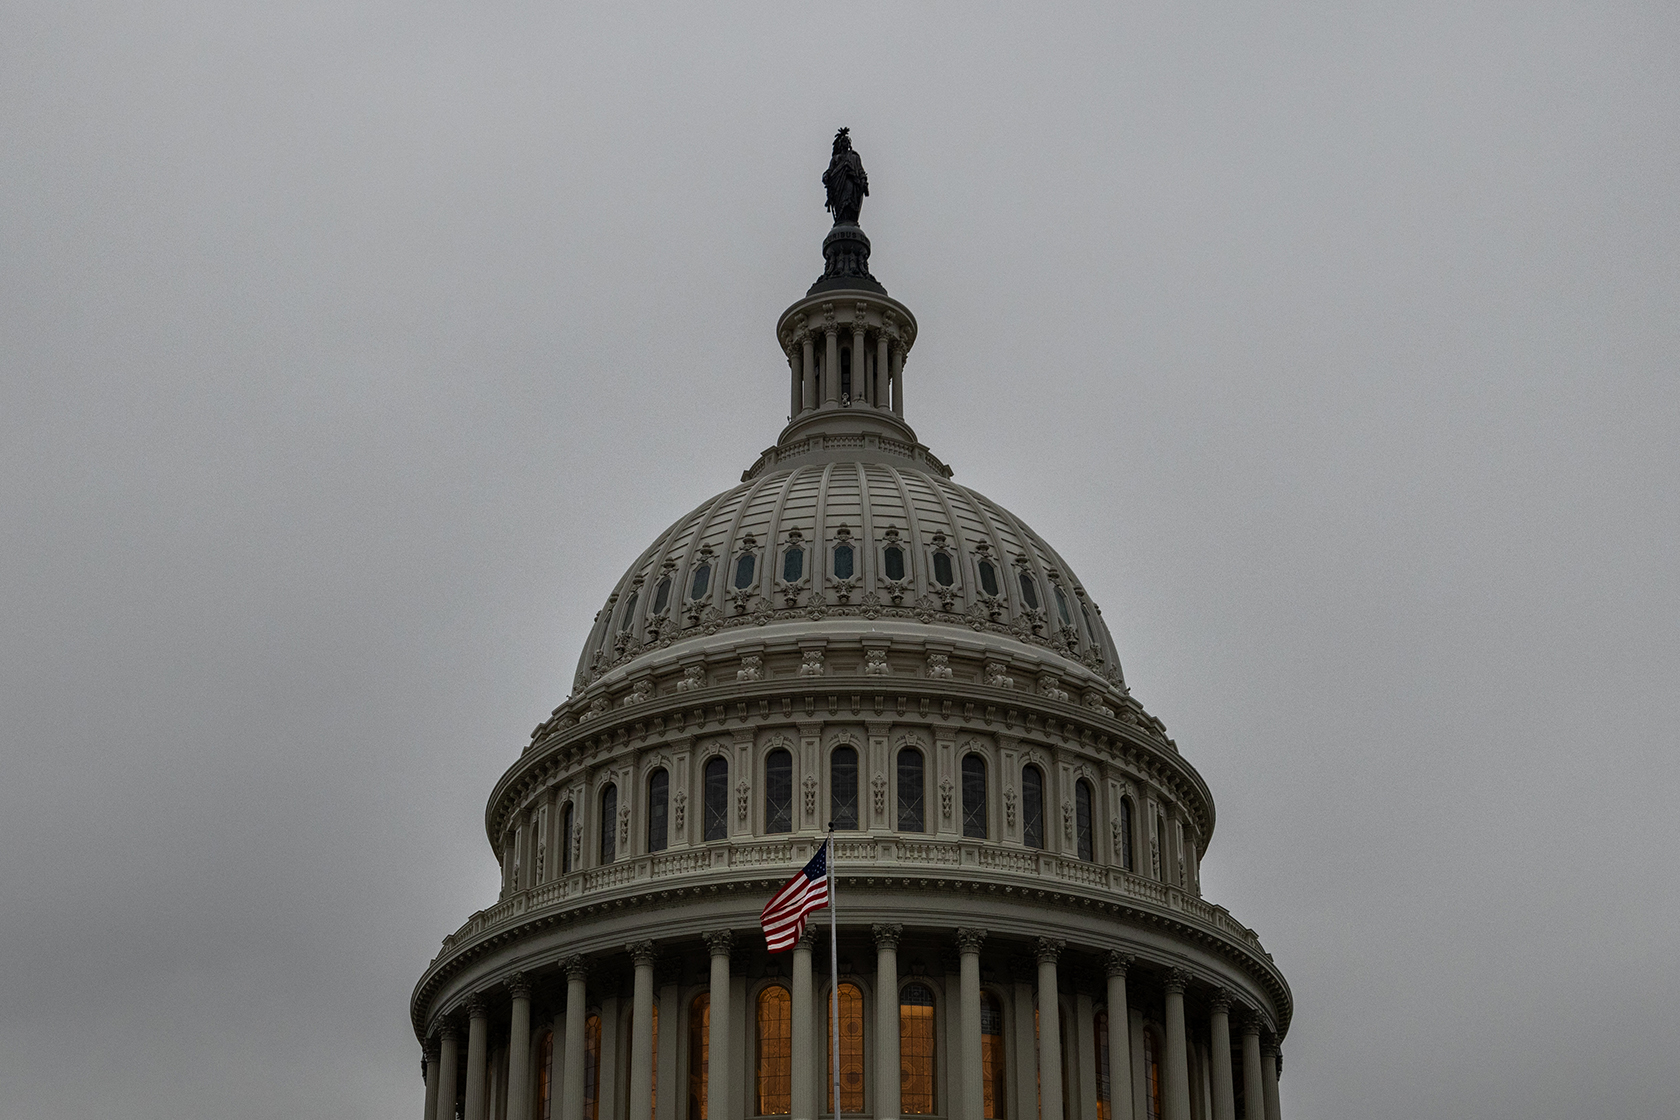 Capitol building against overcast sky